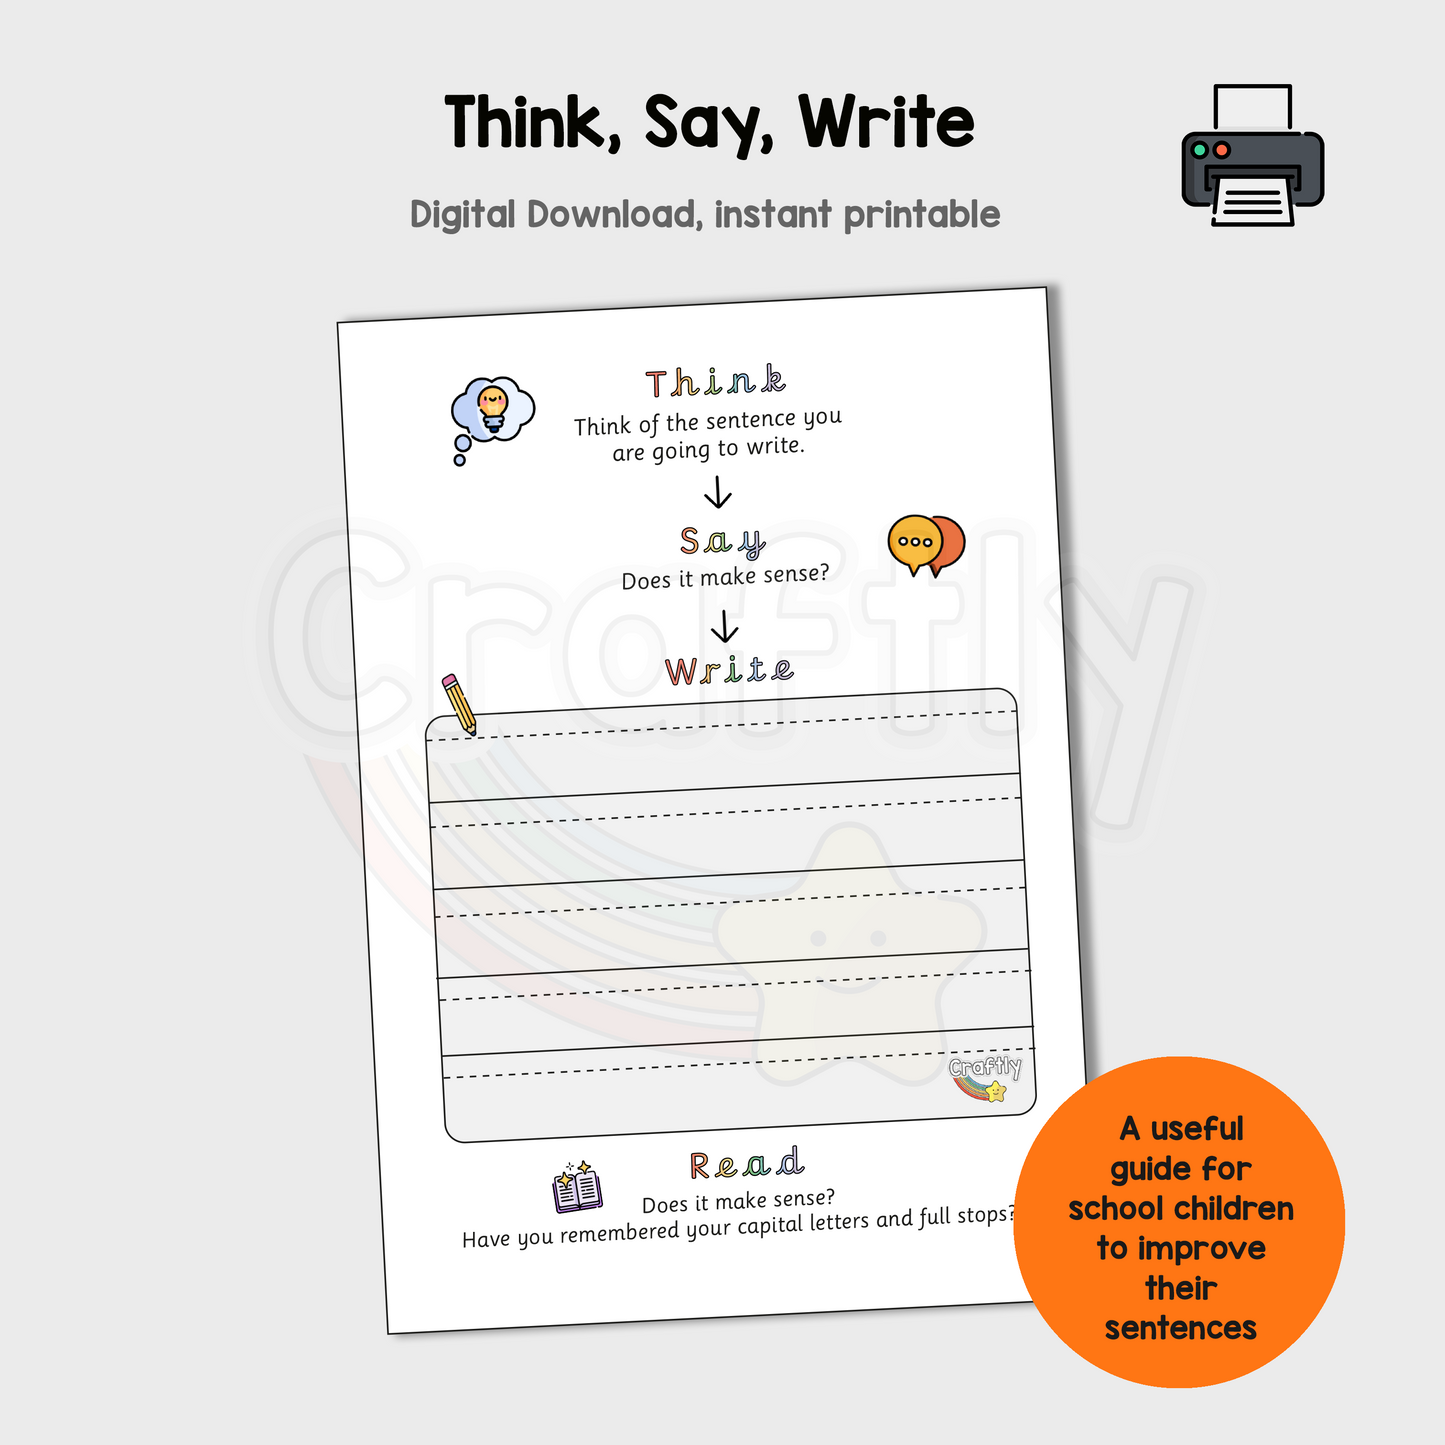 Think, say write Activity